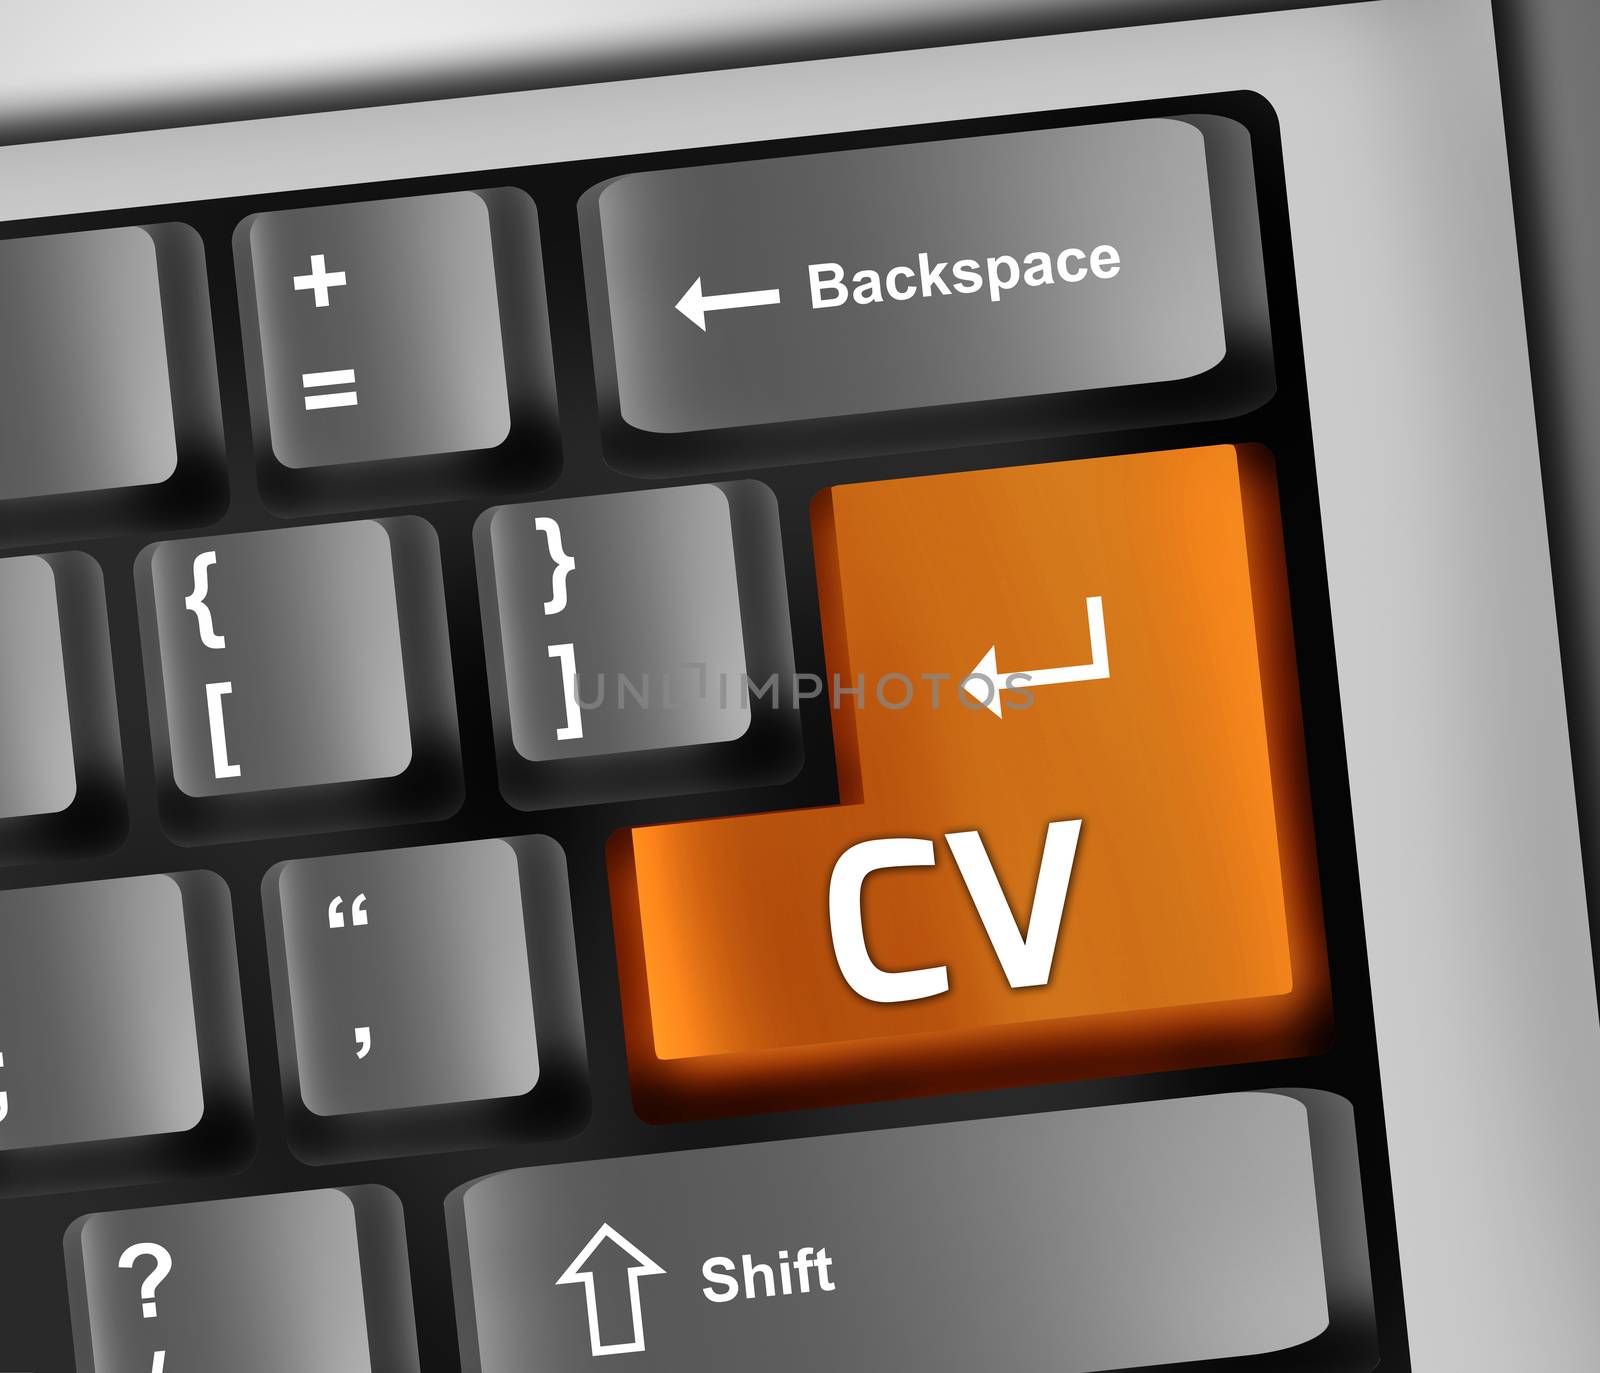 Keyboard Illustration with CV wording